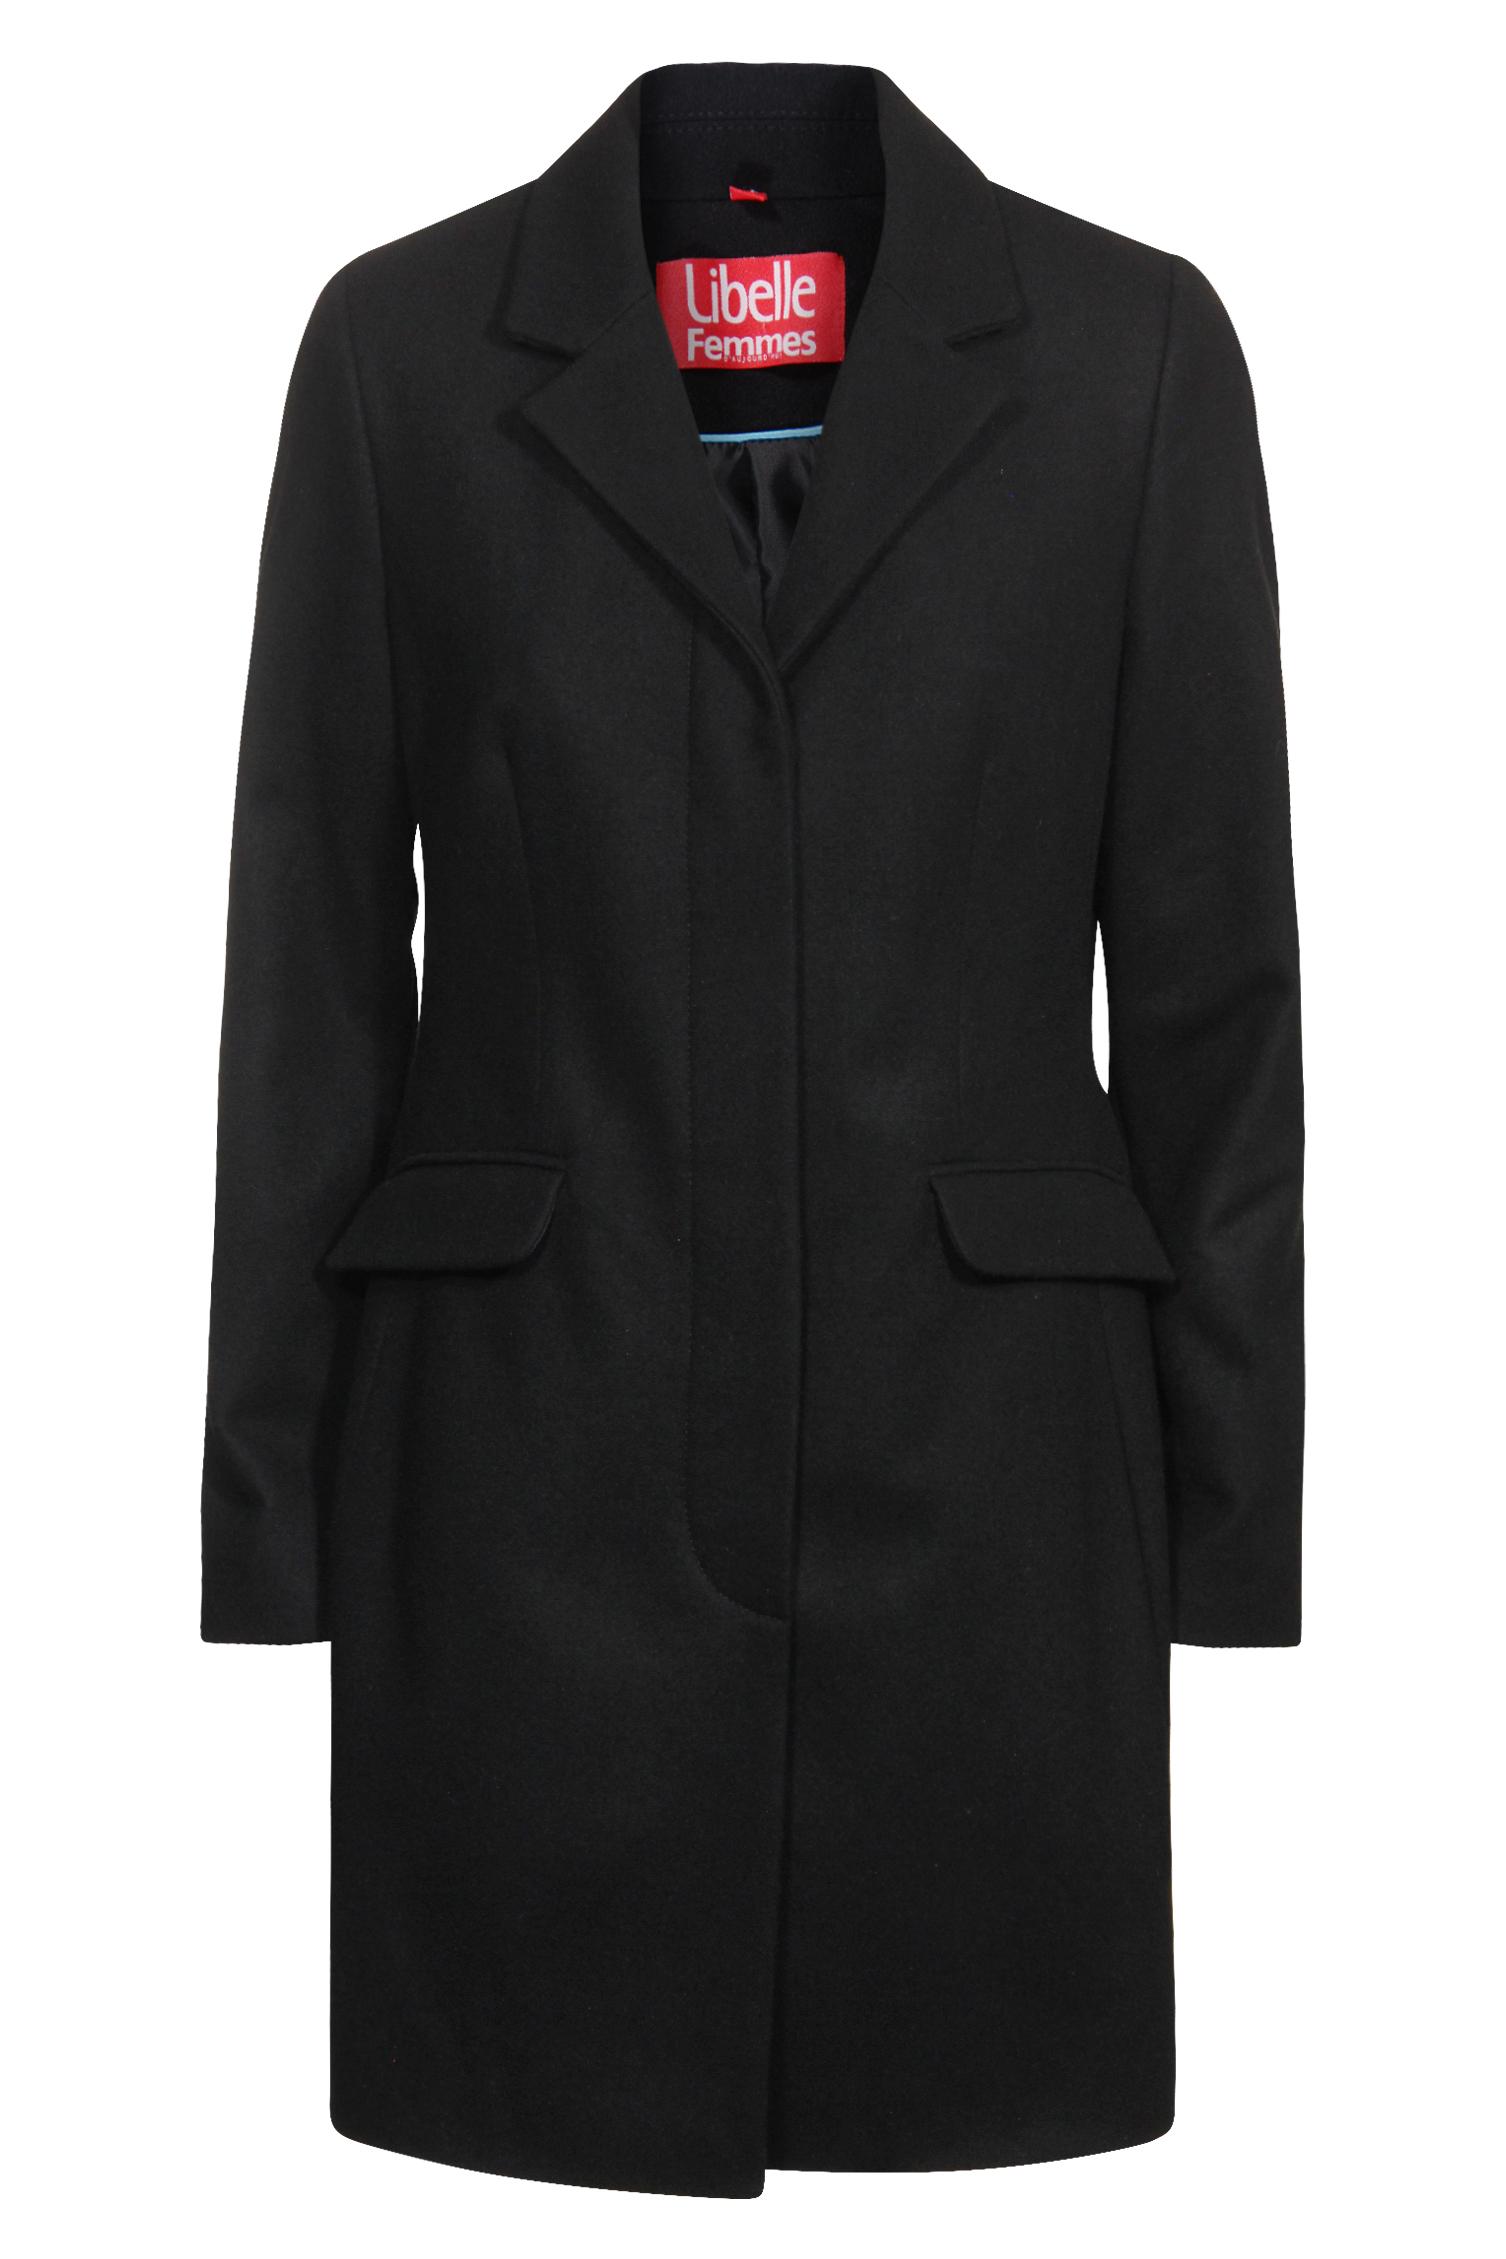 Robe noire - 120€